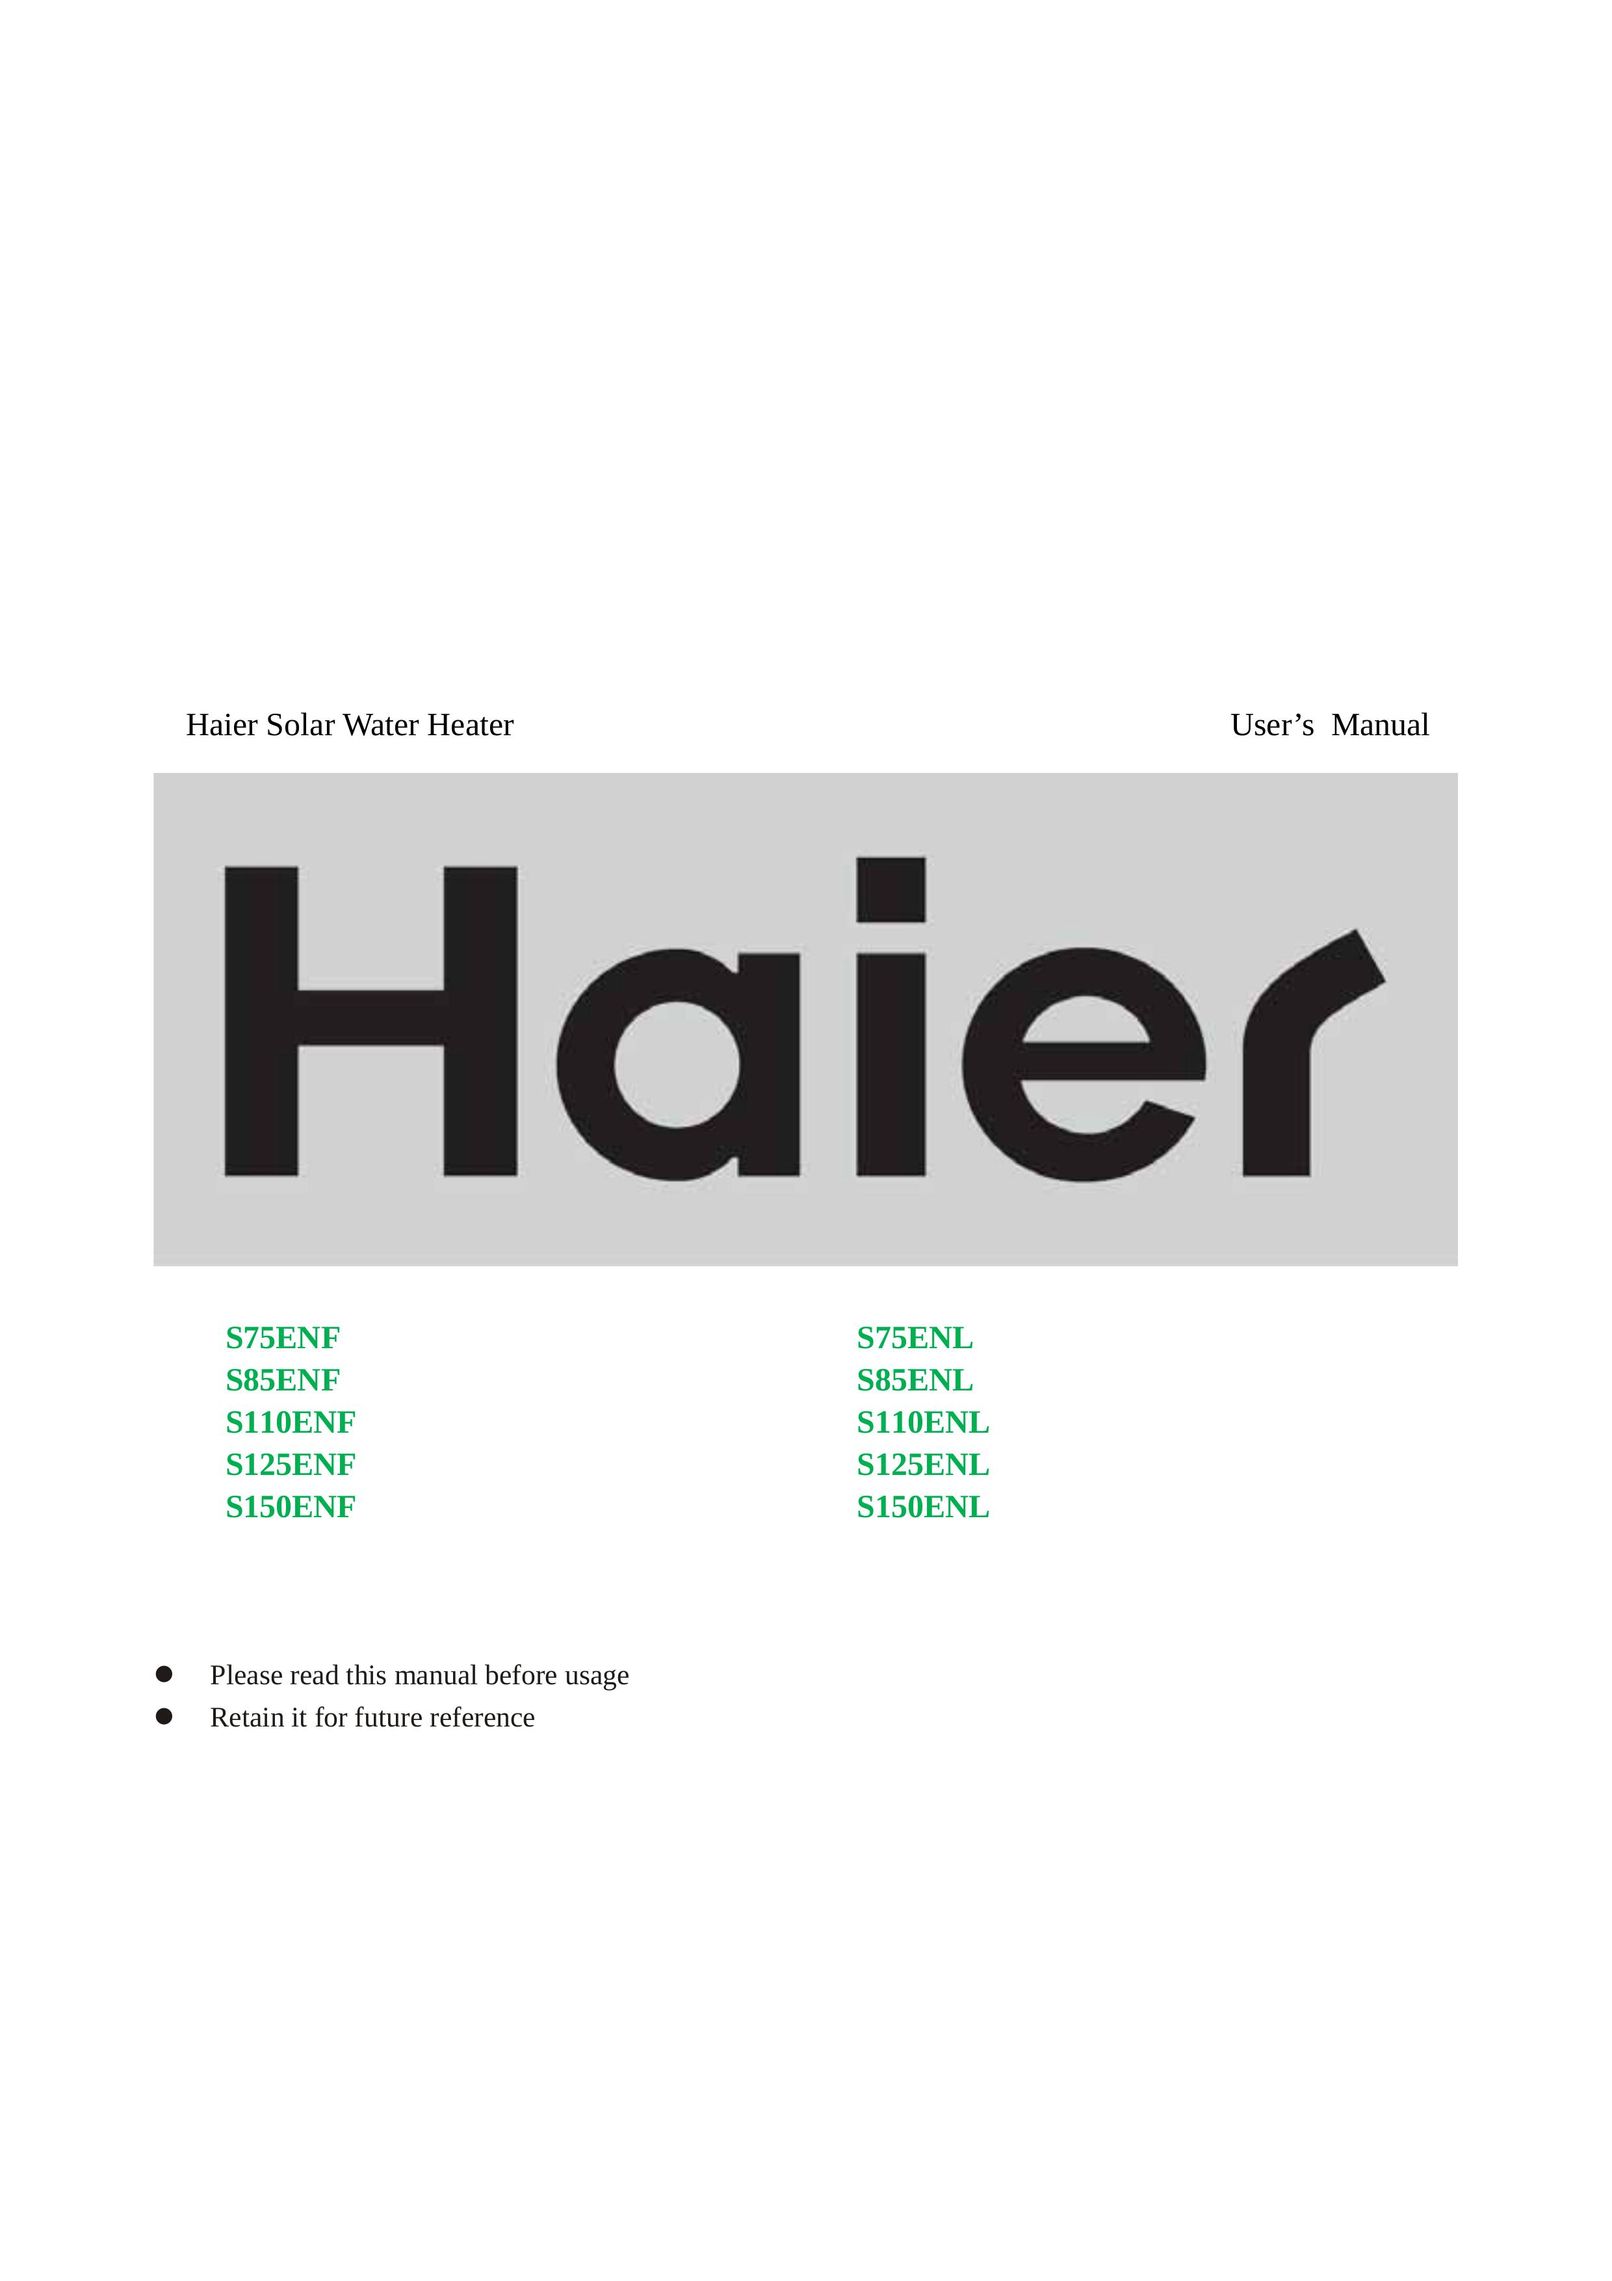 Haier S110ENF Water Heater User Manual